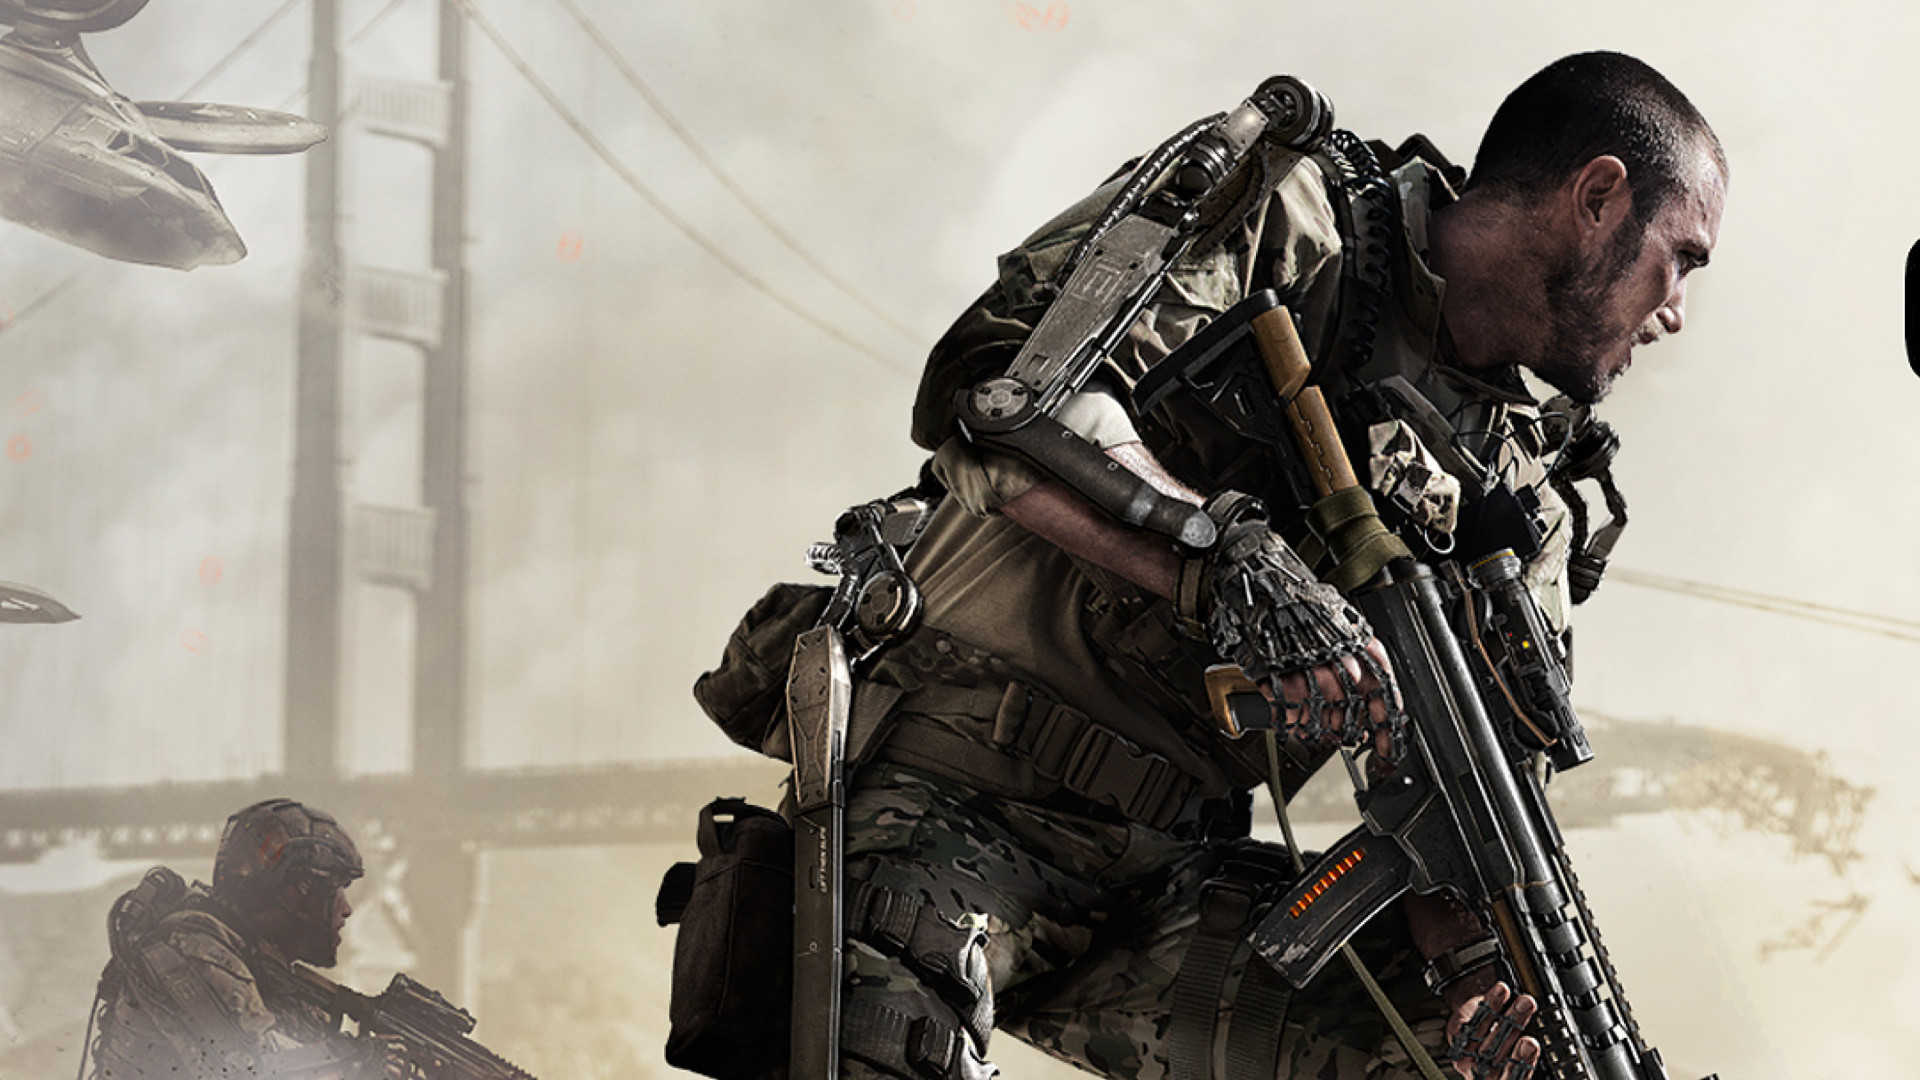 1920x1080 Call of Duty Advanced Warfare, Military, Xbox 360, Call of Duty Modern  Warfare 2, Troop Full HD, HDTV, 1080p 16:9 Wallpaper in 